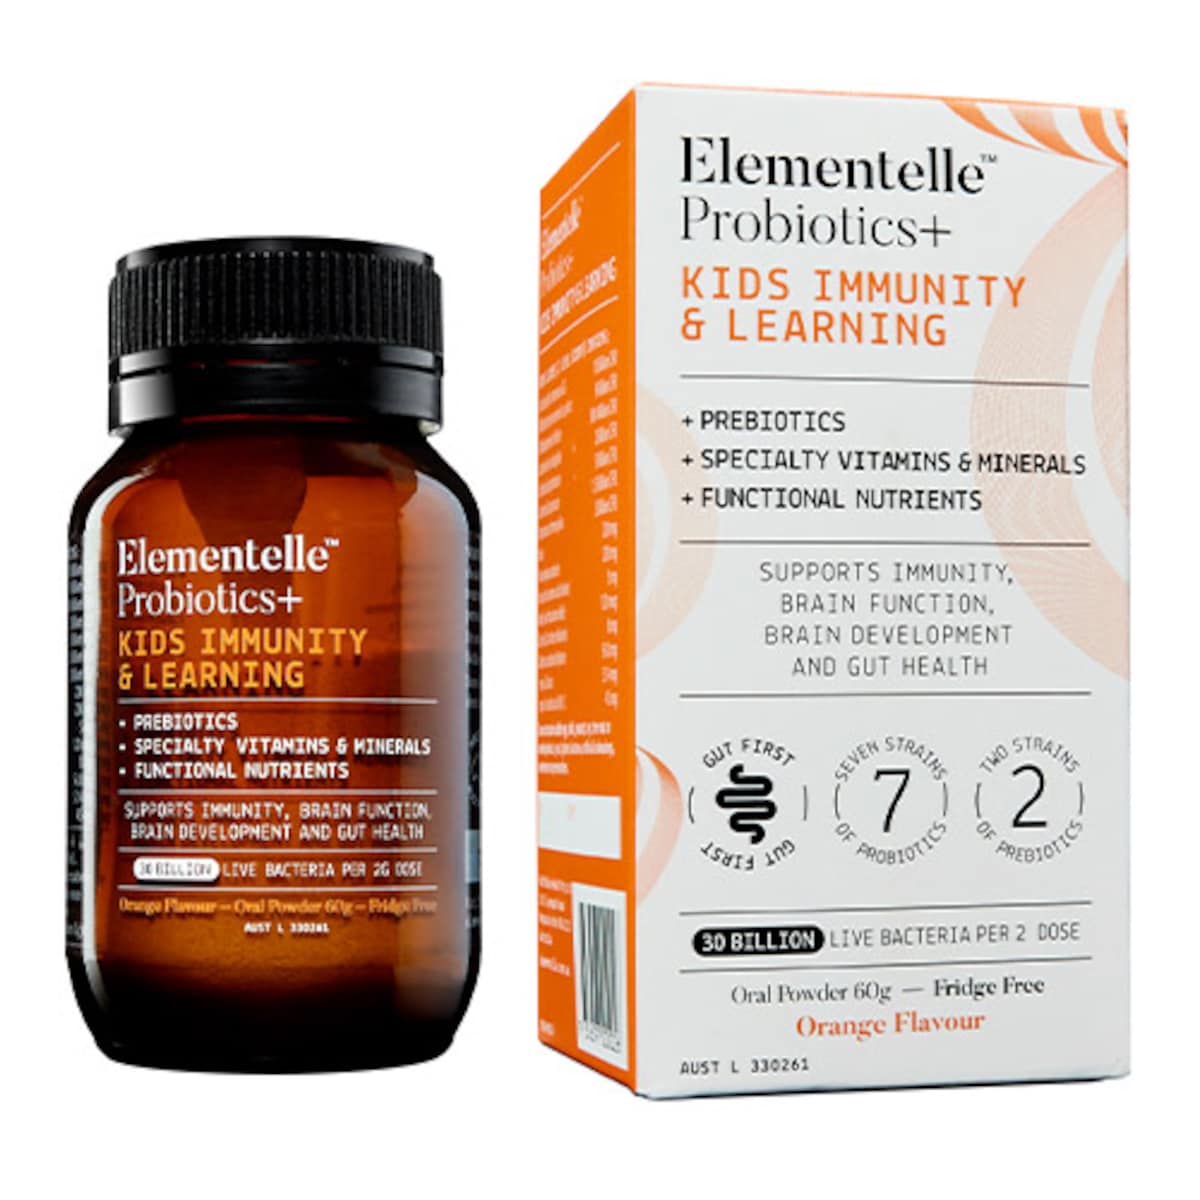 Elementelle Probiotics+ Kids Immunity Powder 60g